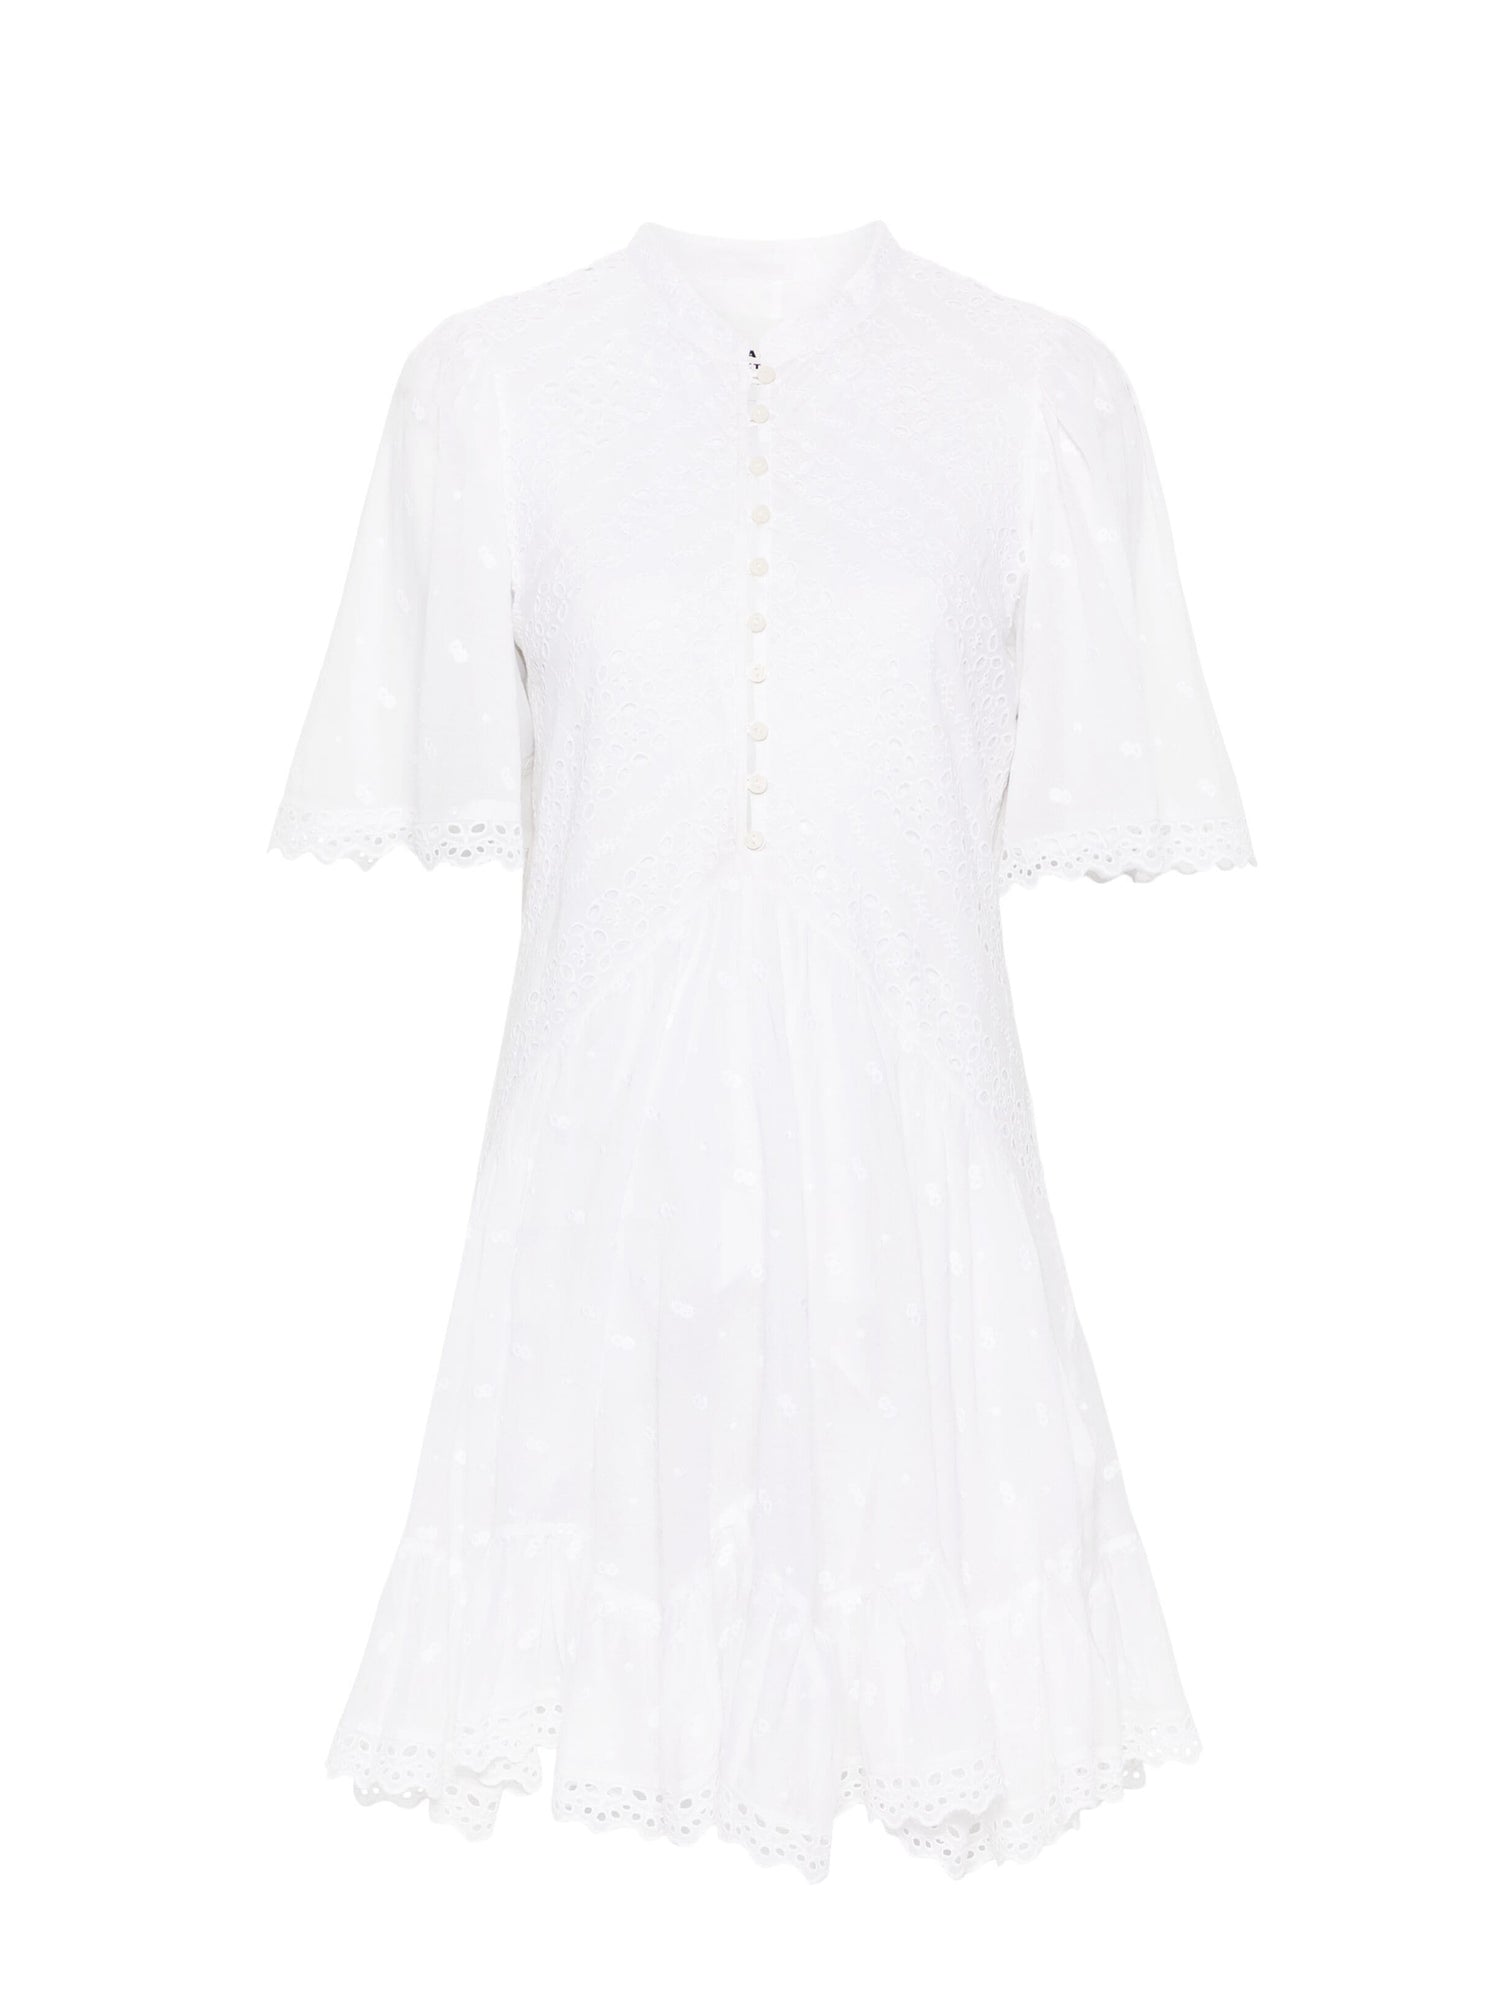 SLAYAE dress, white